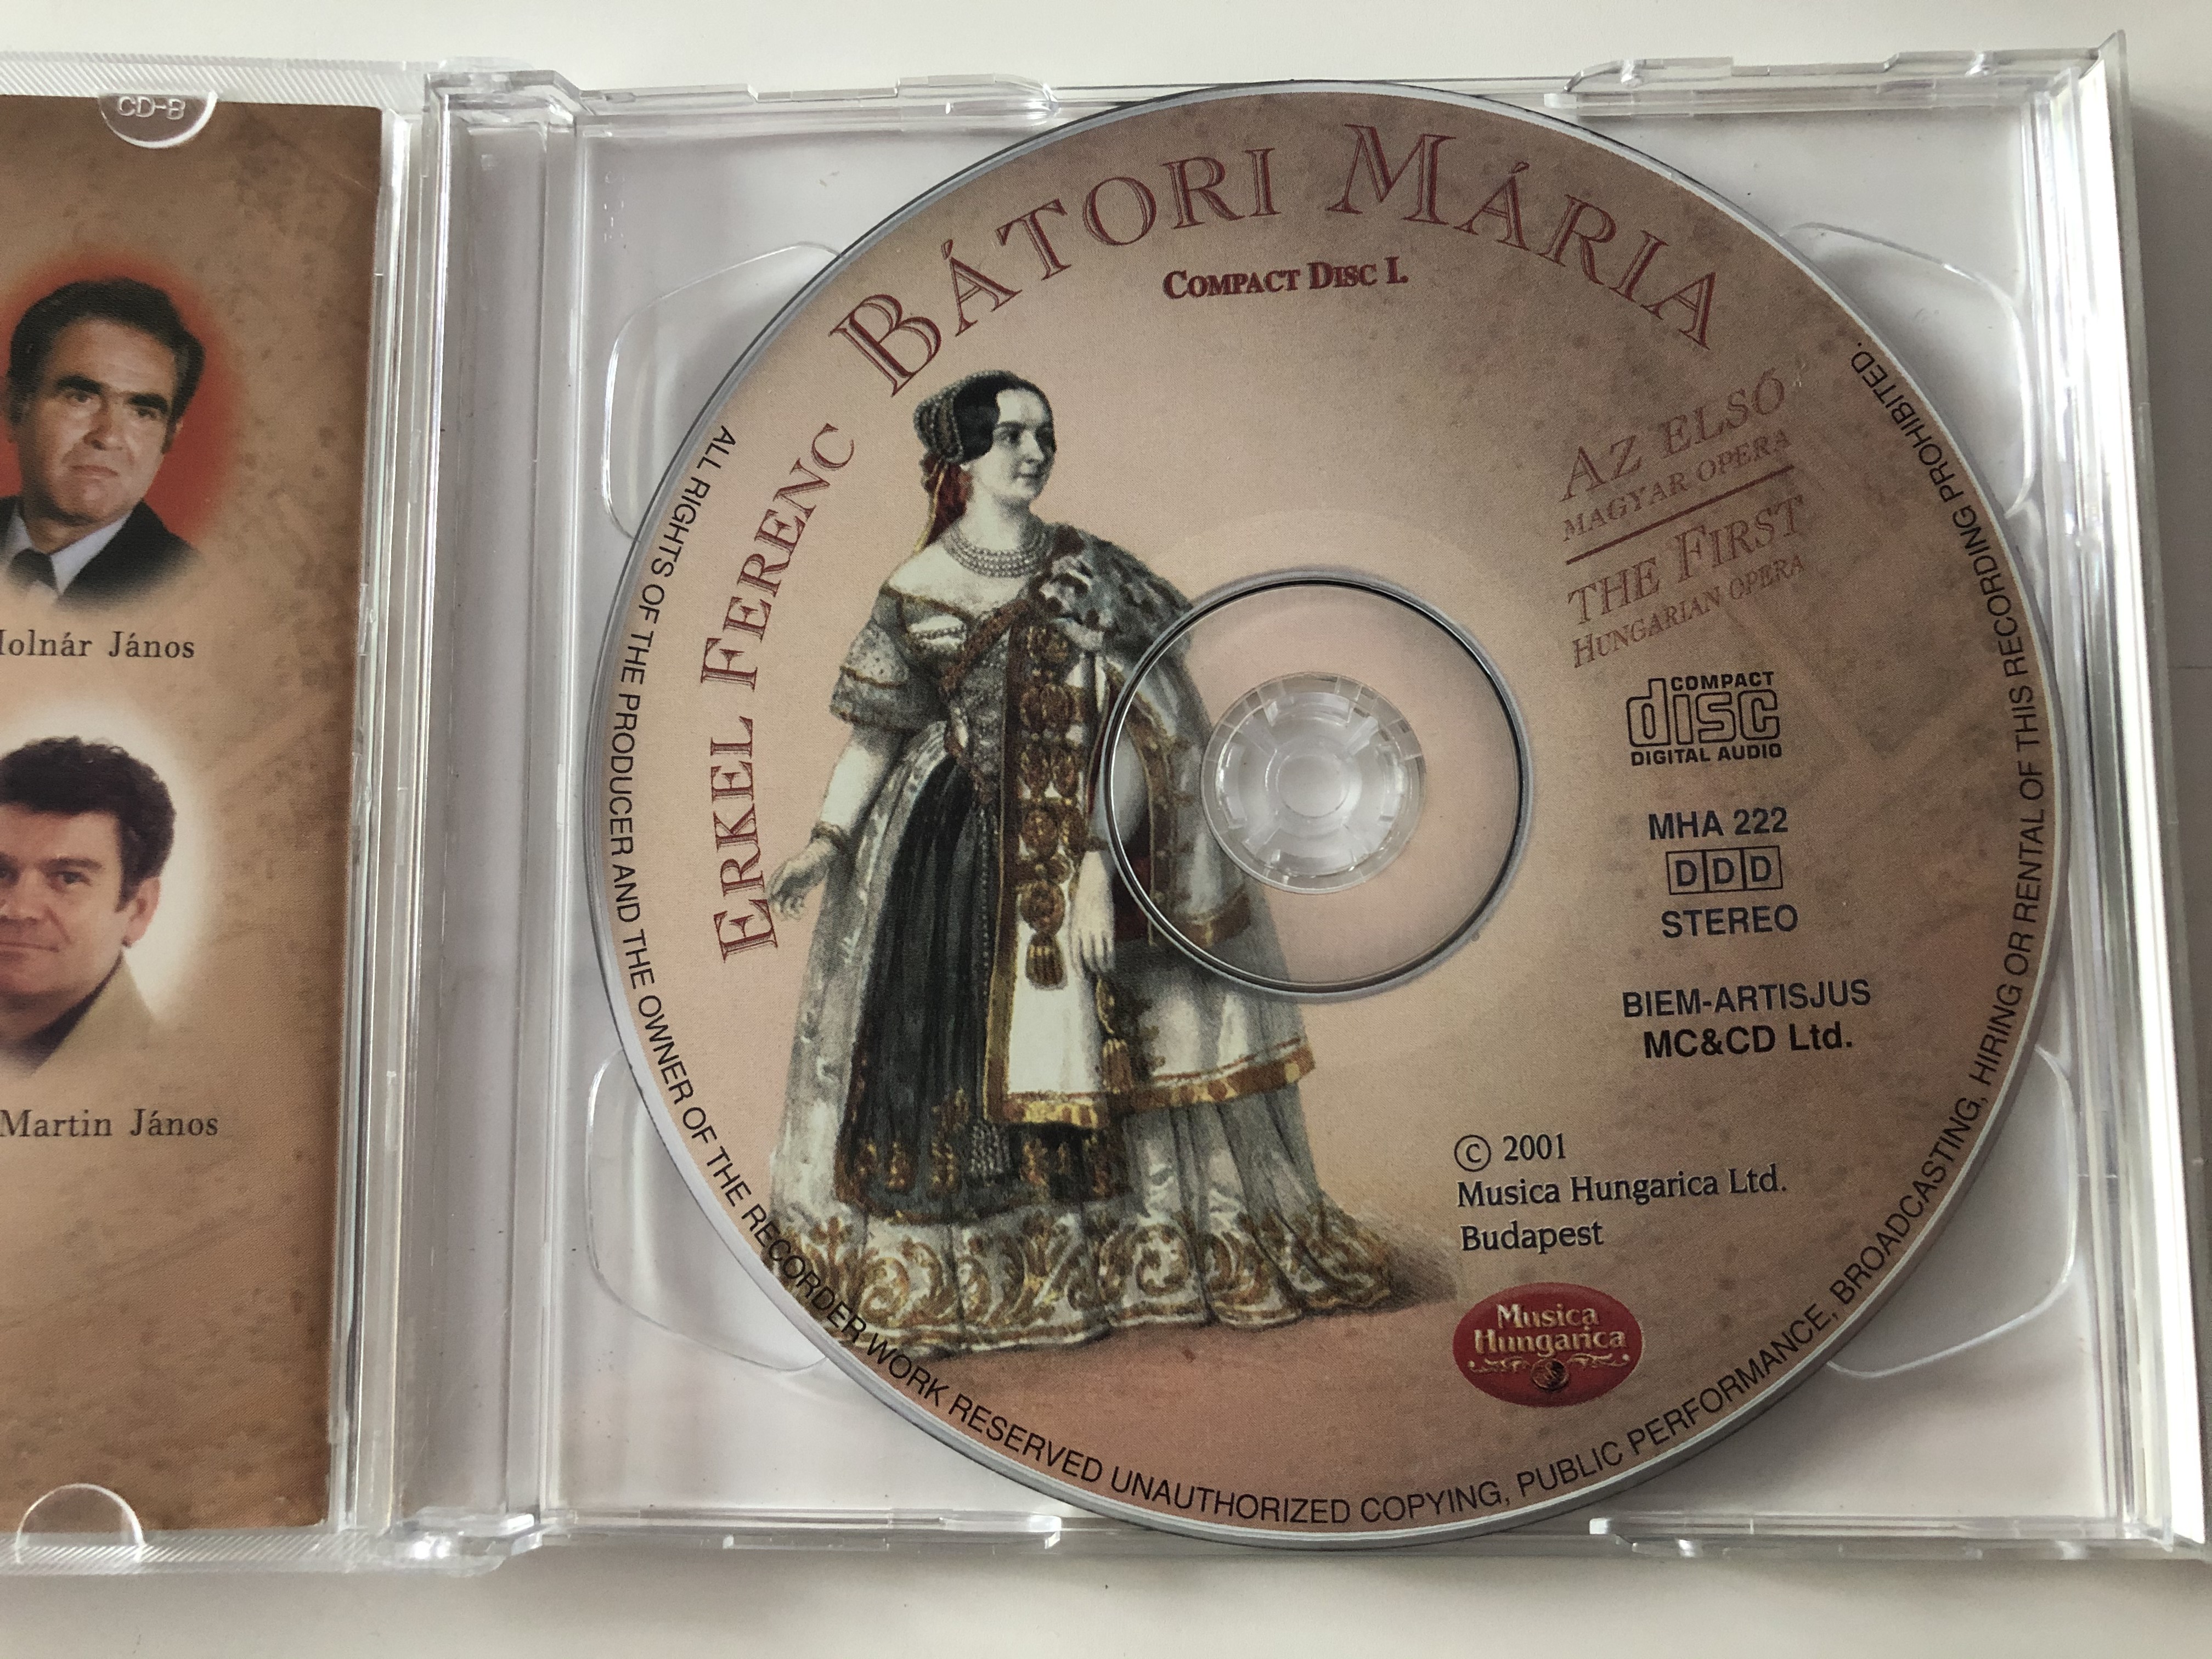 batori-maria-opera-az-elso-magyar-opera-the-first-hungarian-opera-erkel-ferenc-musica-hungarica-ltd.-budapest-2x-audio-cd-2001-stereo-mha-222-4-.jpg